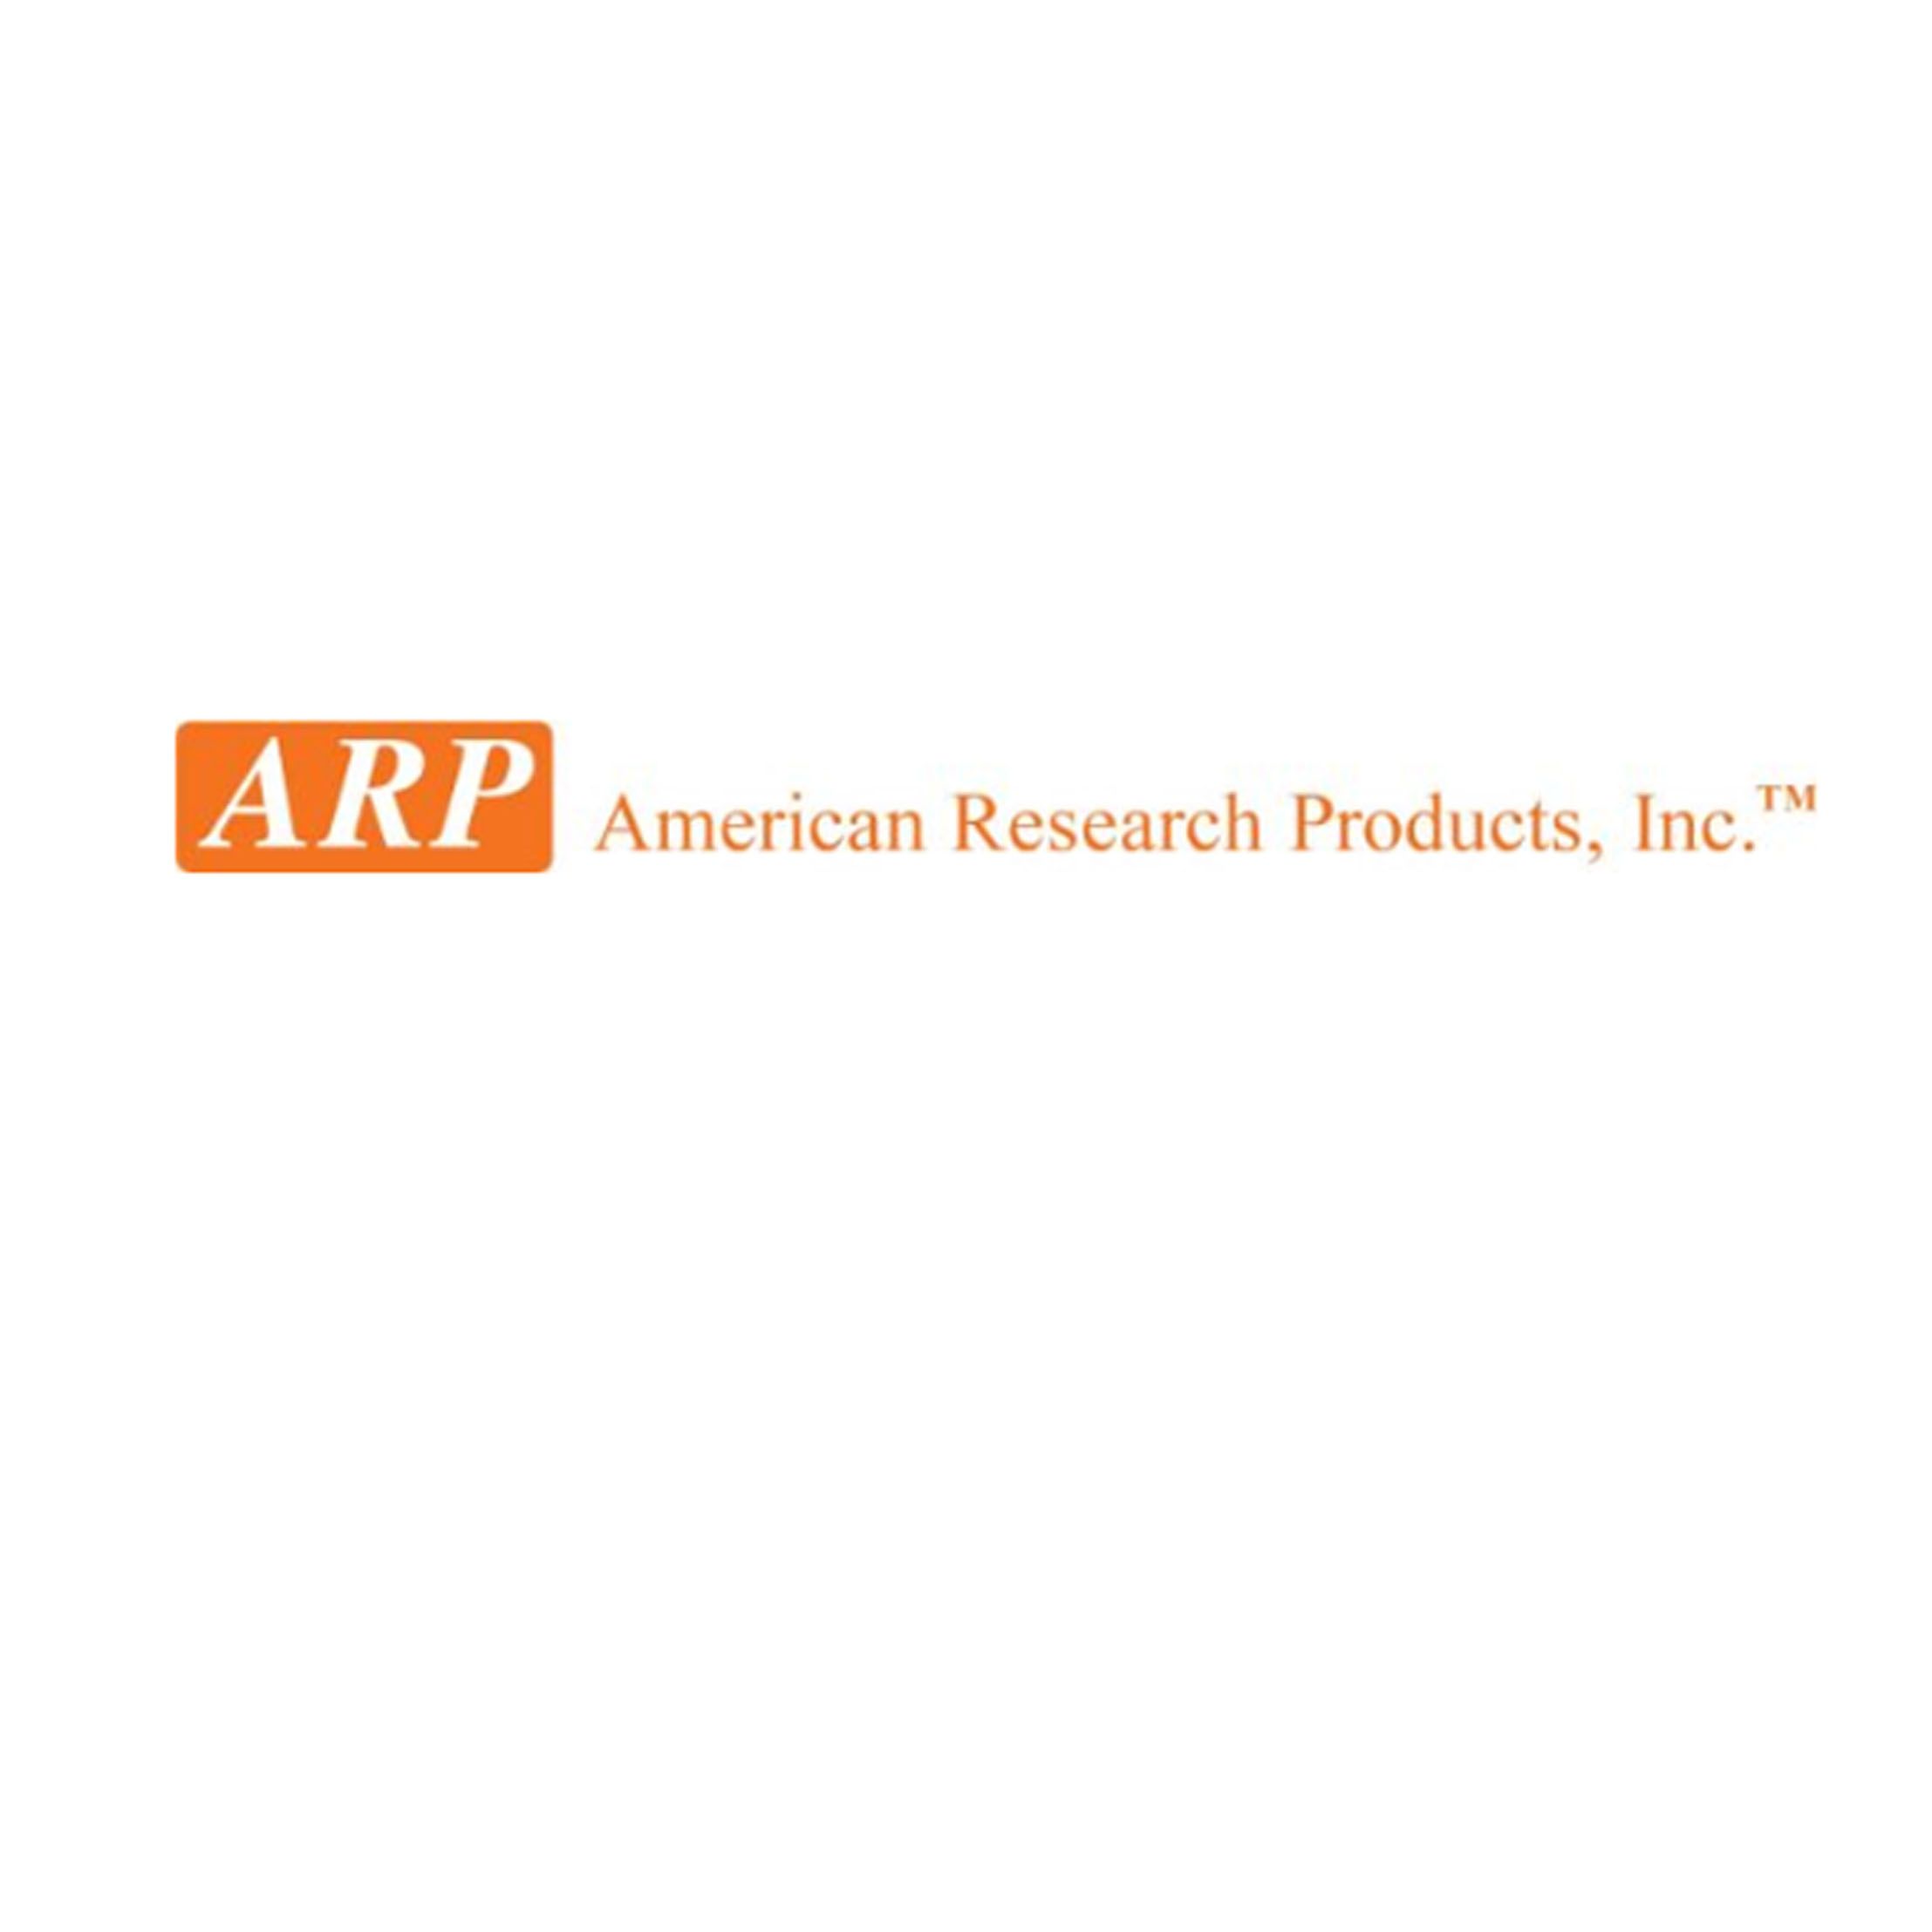 ARP American Research Products免疫生物学研究和诊断产品